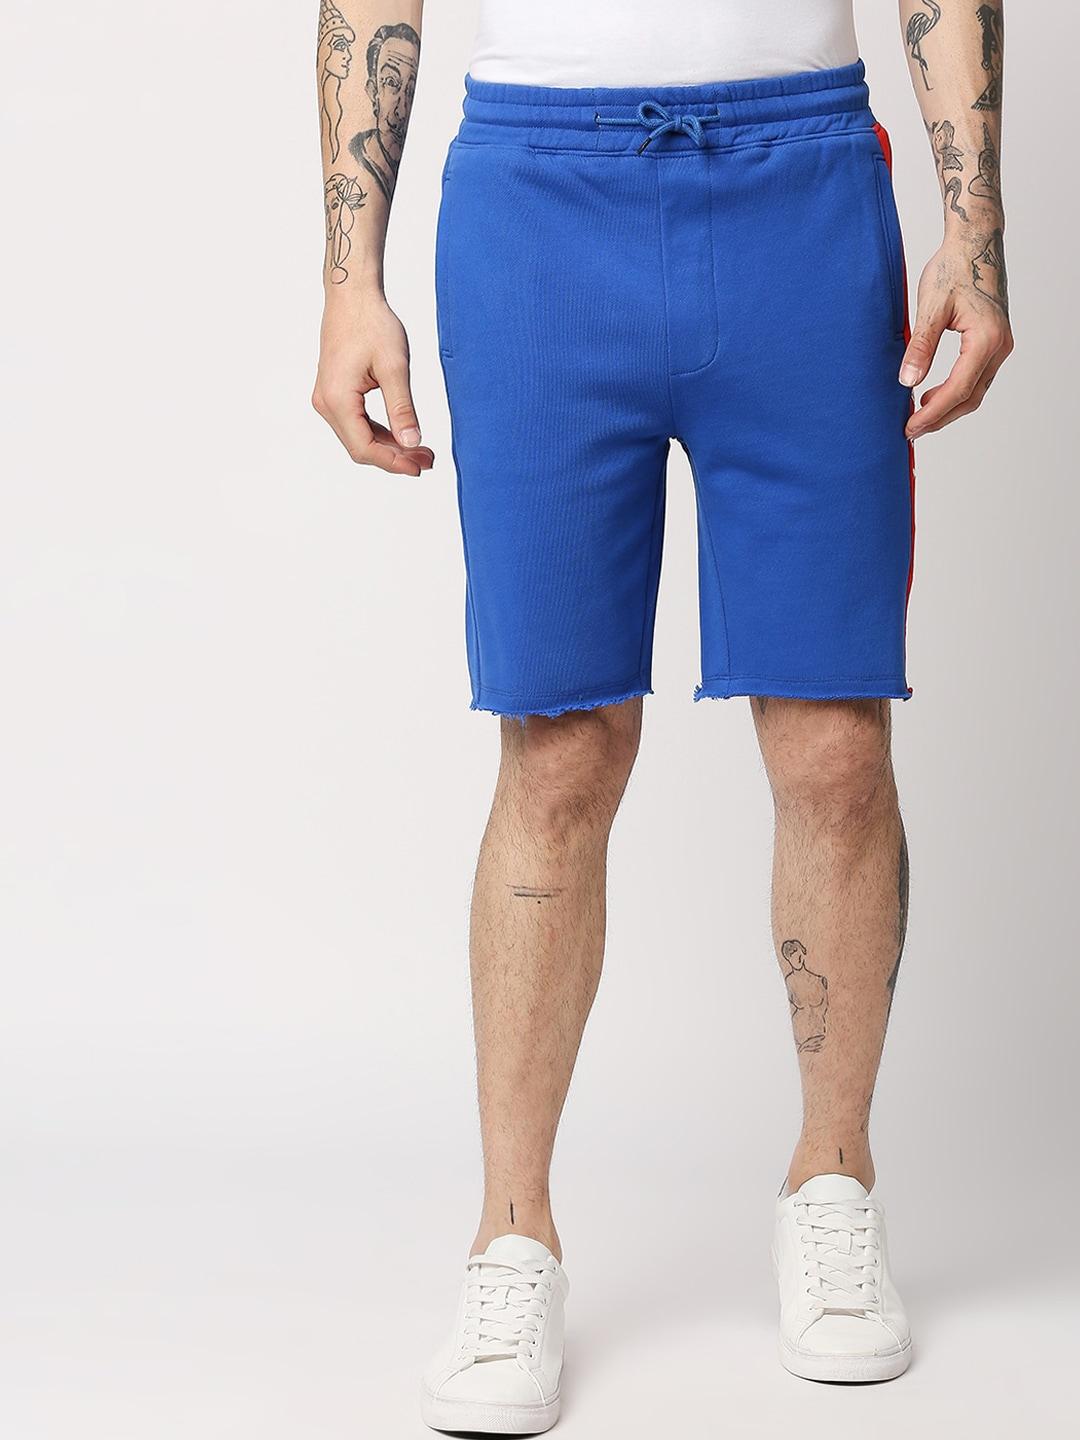 disrupt-men-blue-typography-printed-shorts